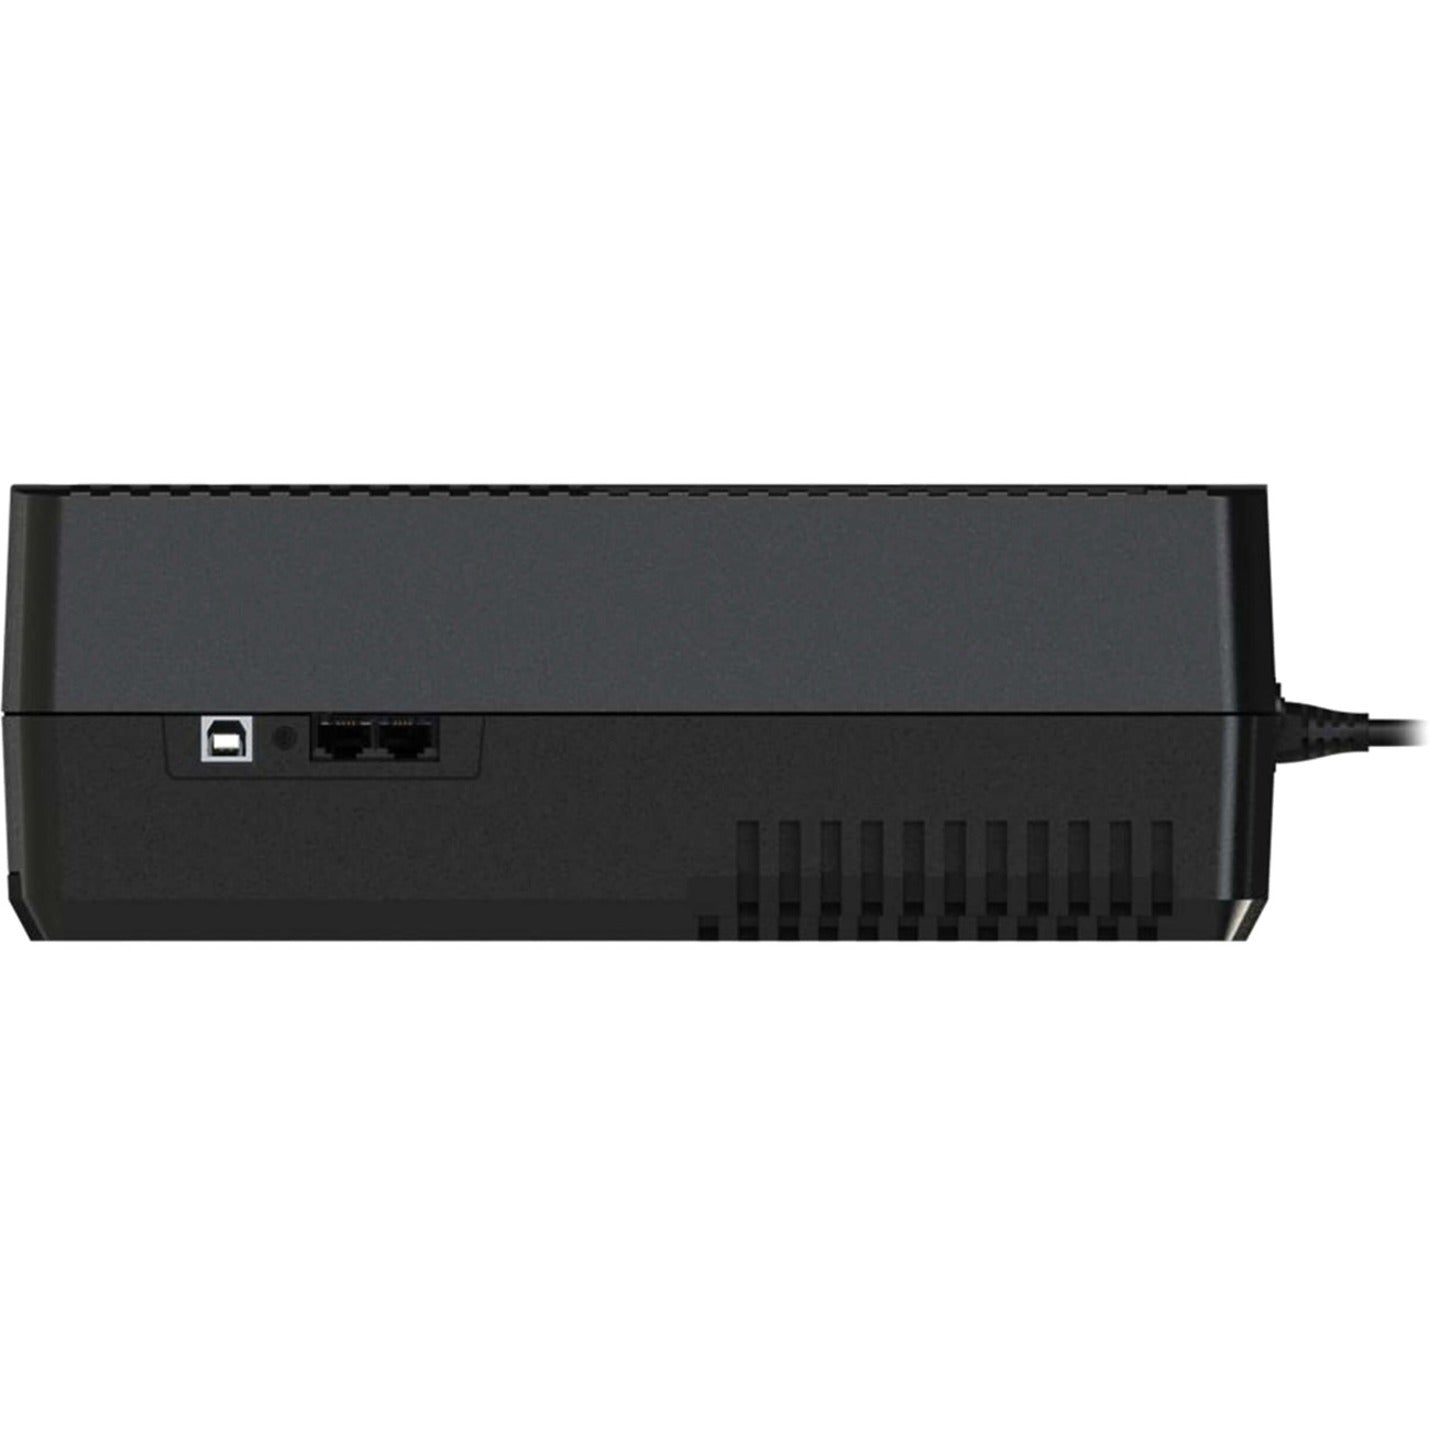 Tripp Lite OMNISMART550MX OmniSmart 550VA Ultra-compact Desktop/Tower/Wall Mount UPS, 2 Year Warranty, Pure Sine Wave, USB Port